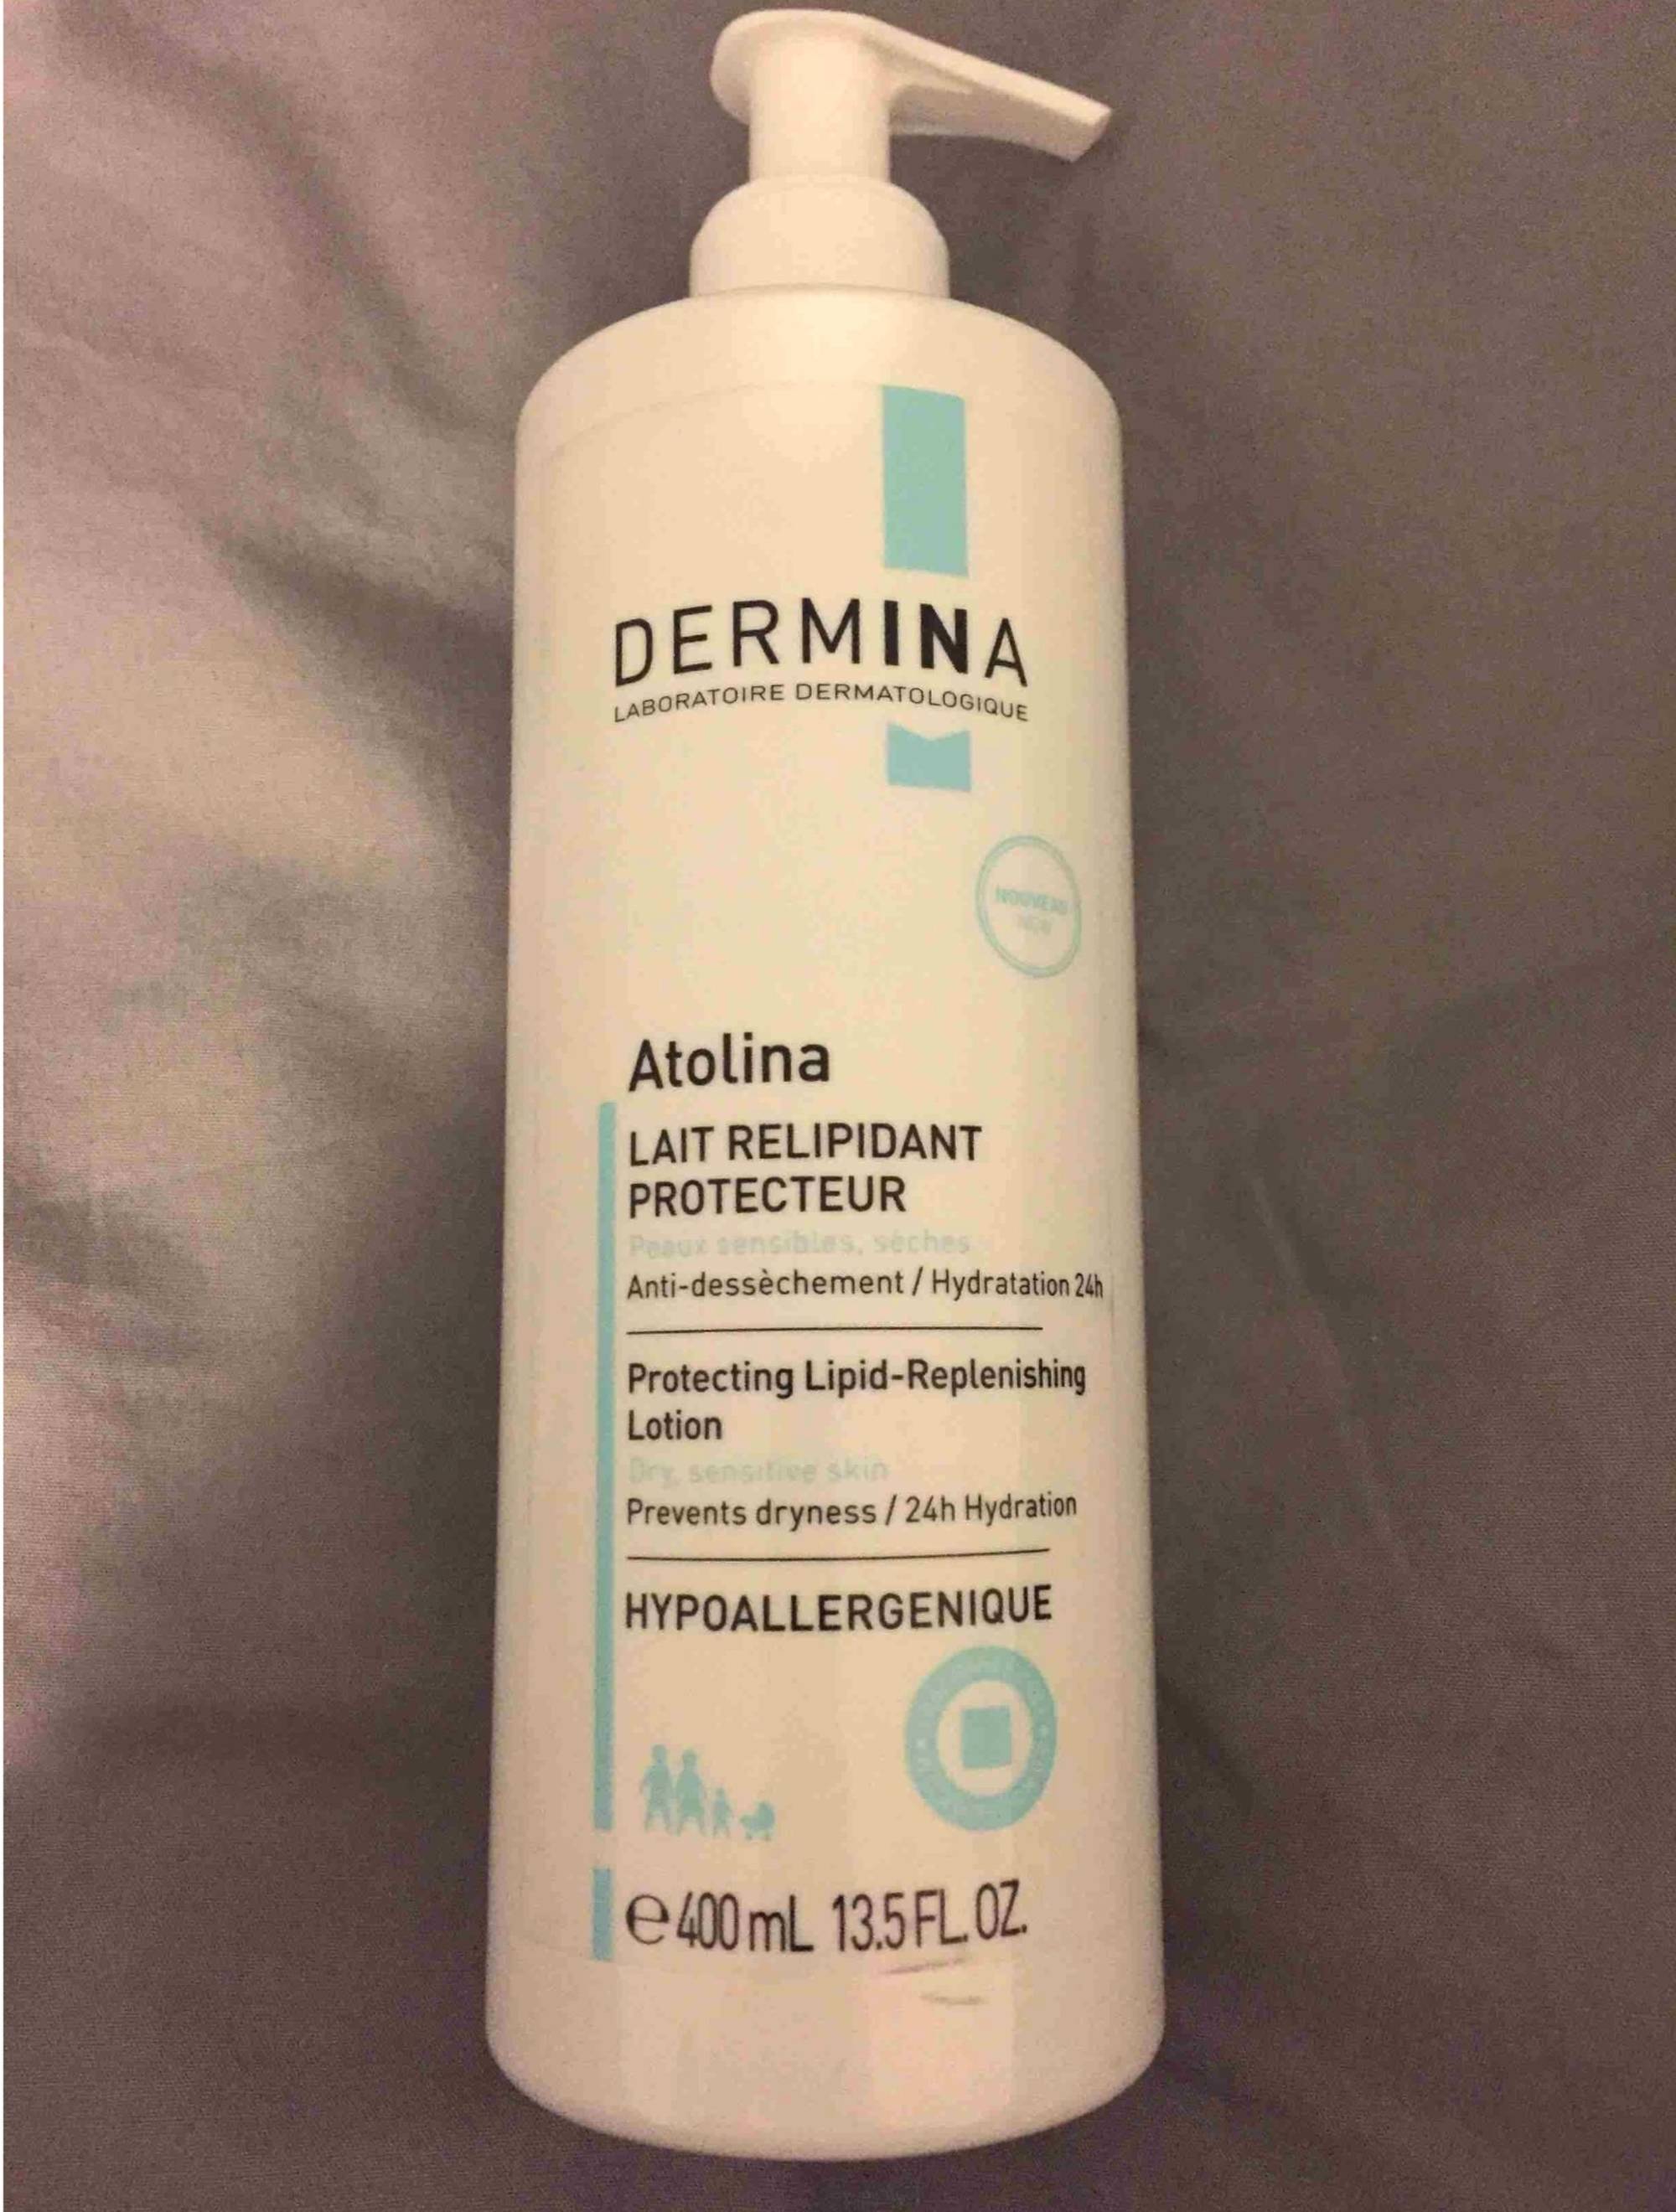 DERMINA - Atolina - Lait relipidant protecteur